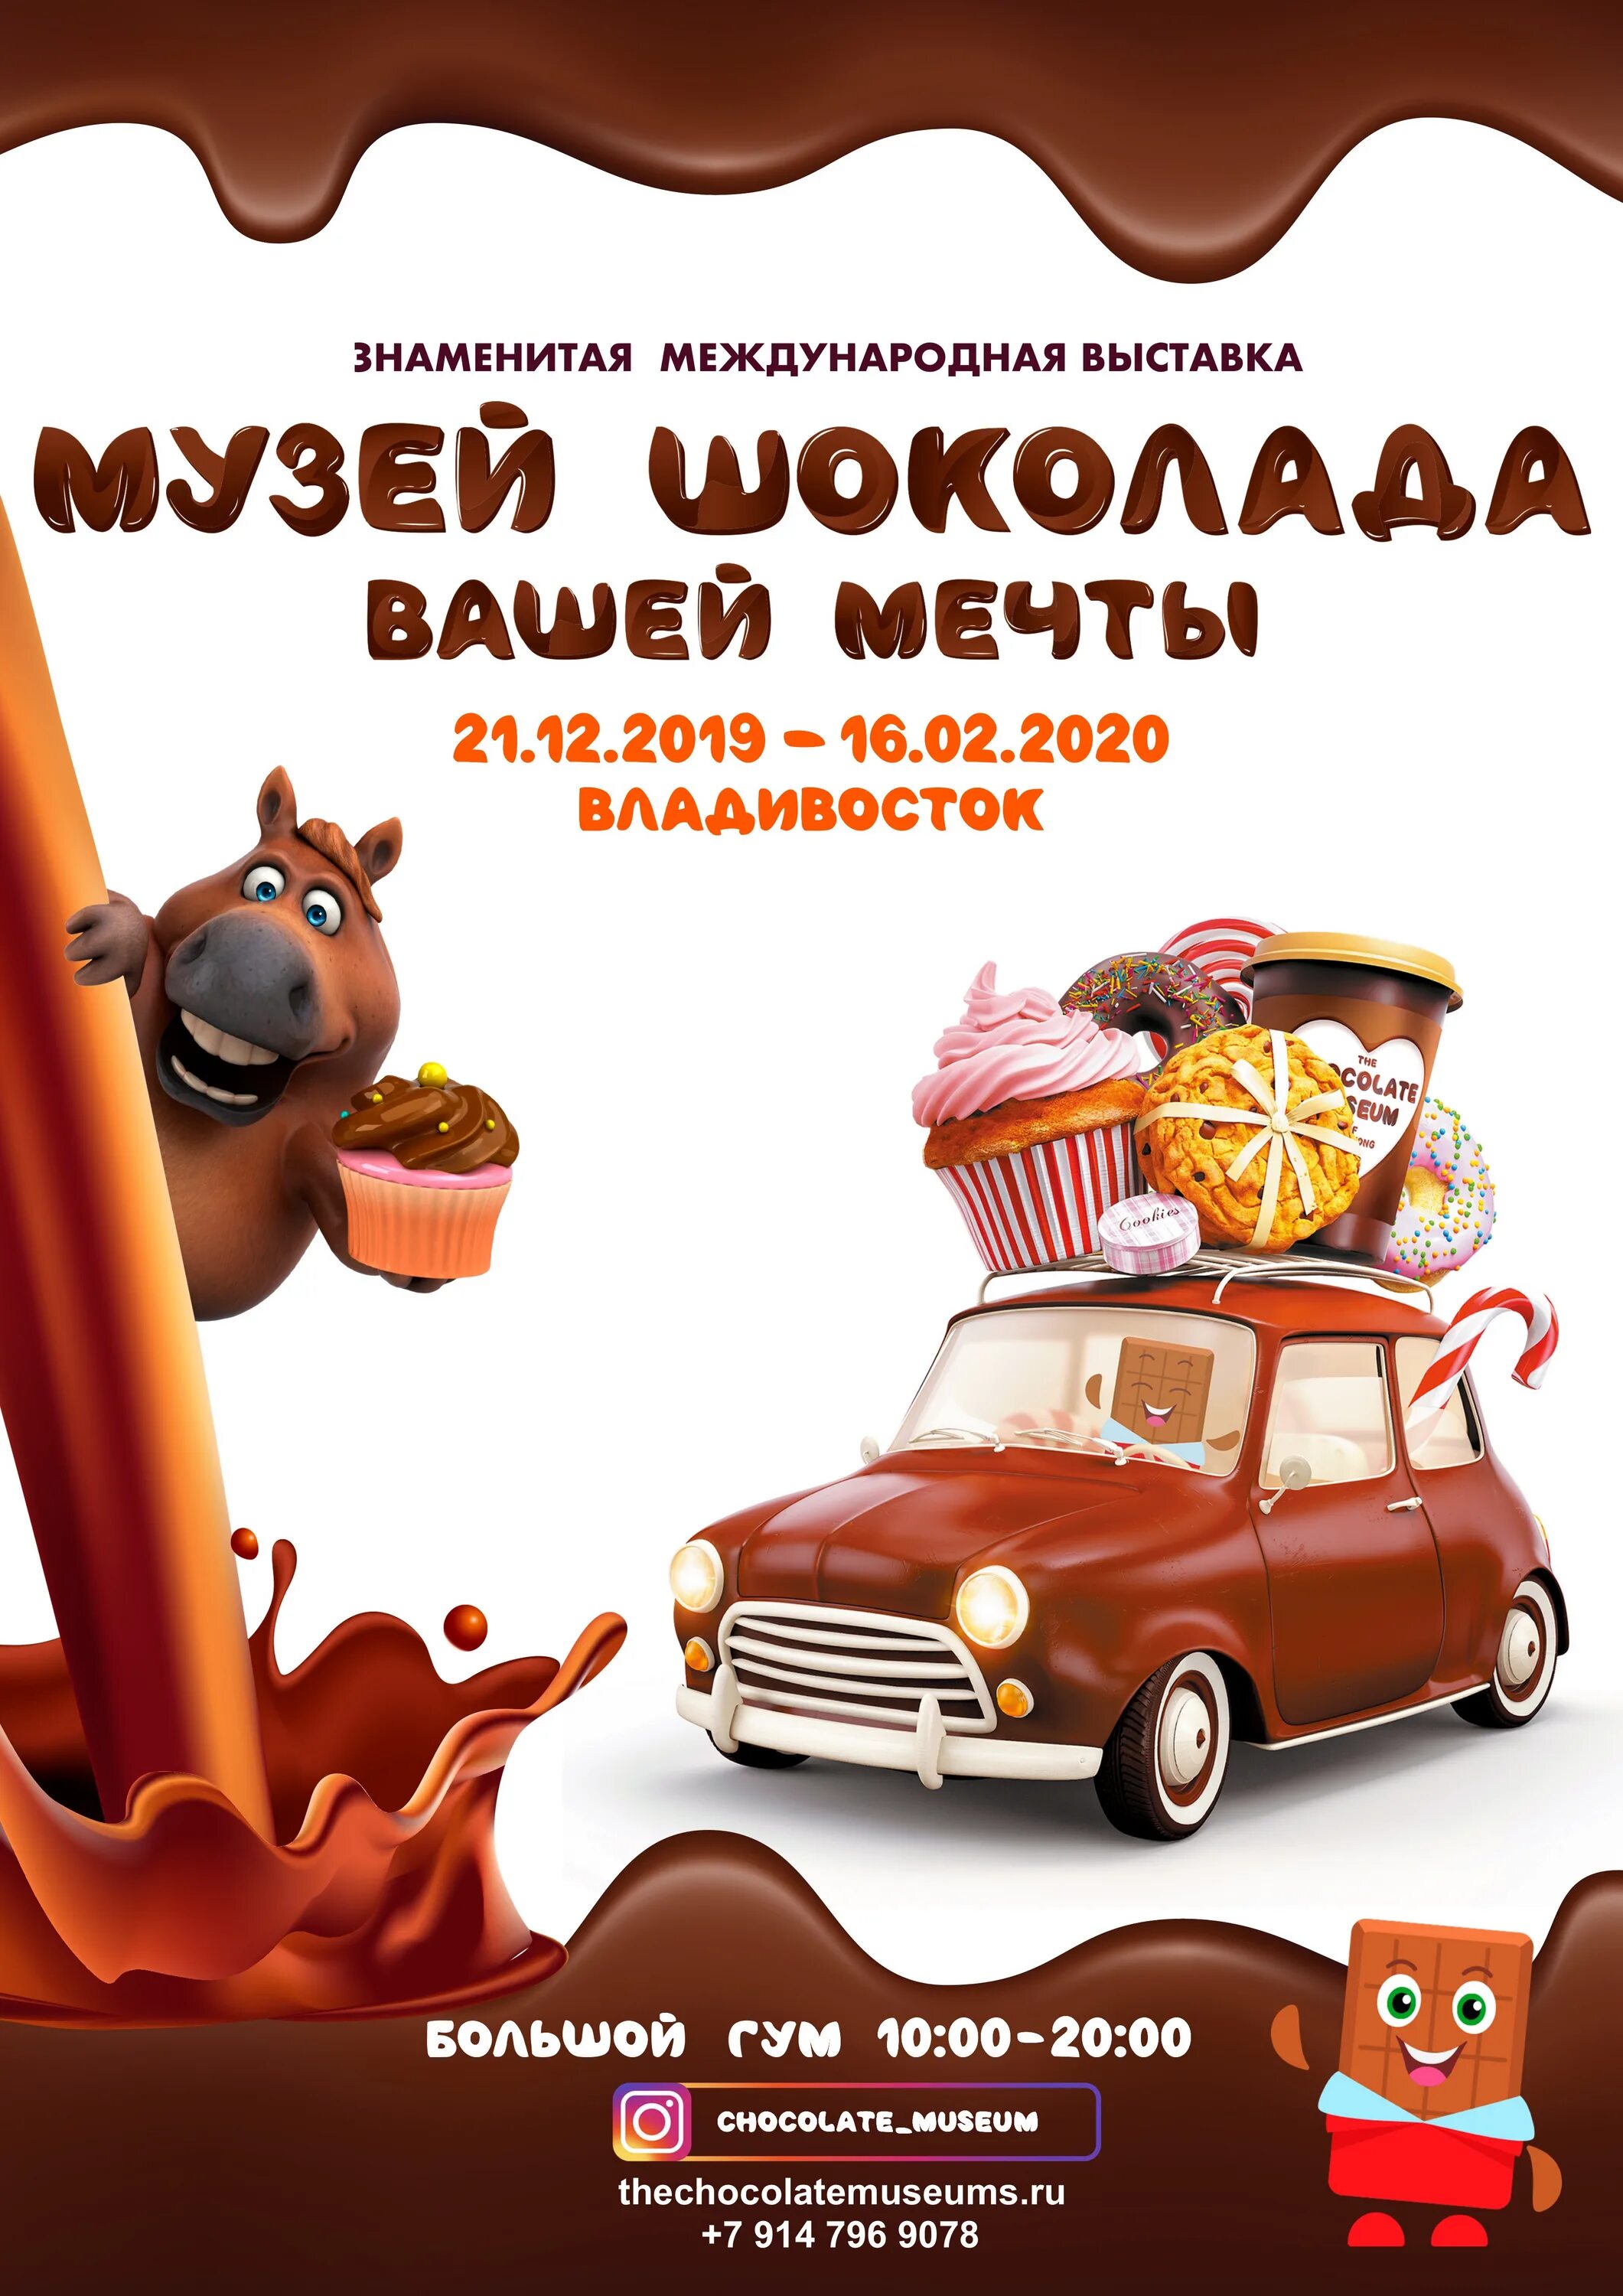 Шоколад афиша. Музей шоколада Владивосток. Выставка шоколада. Афиша выставка шоколада. Новороссийск музей шоколада.